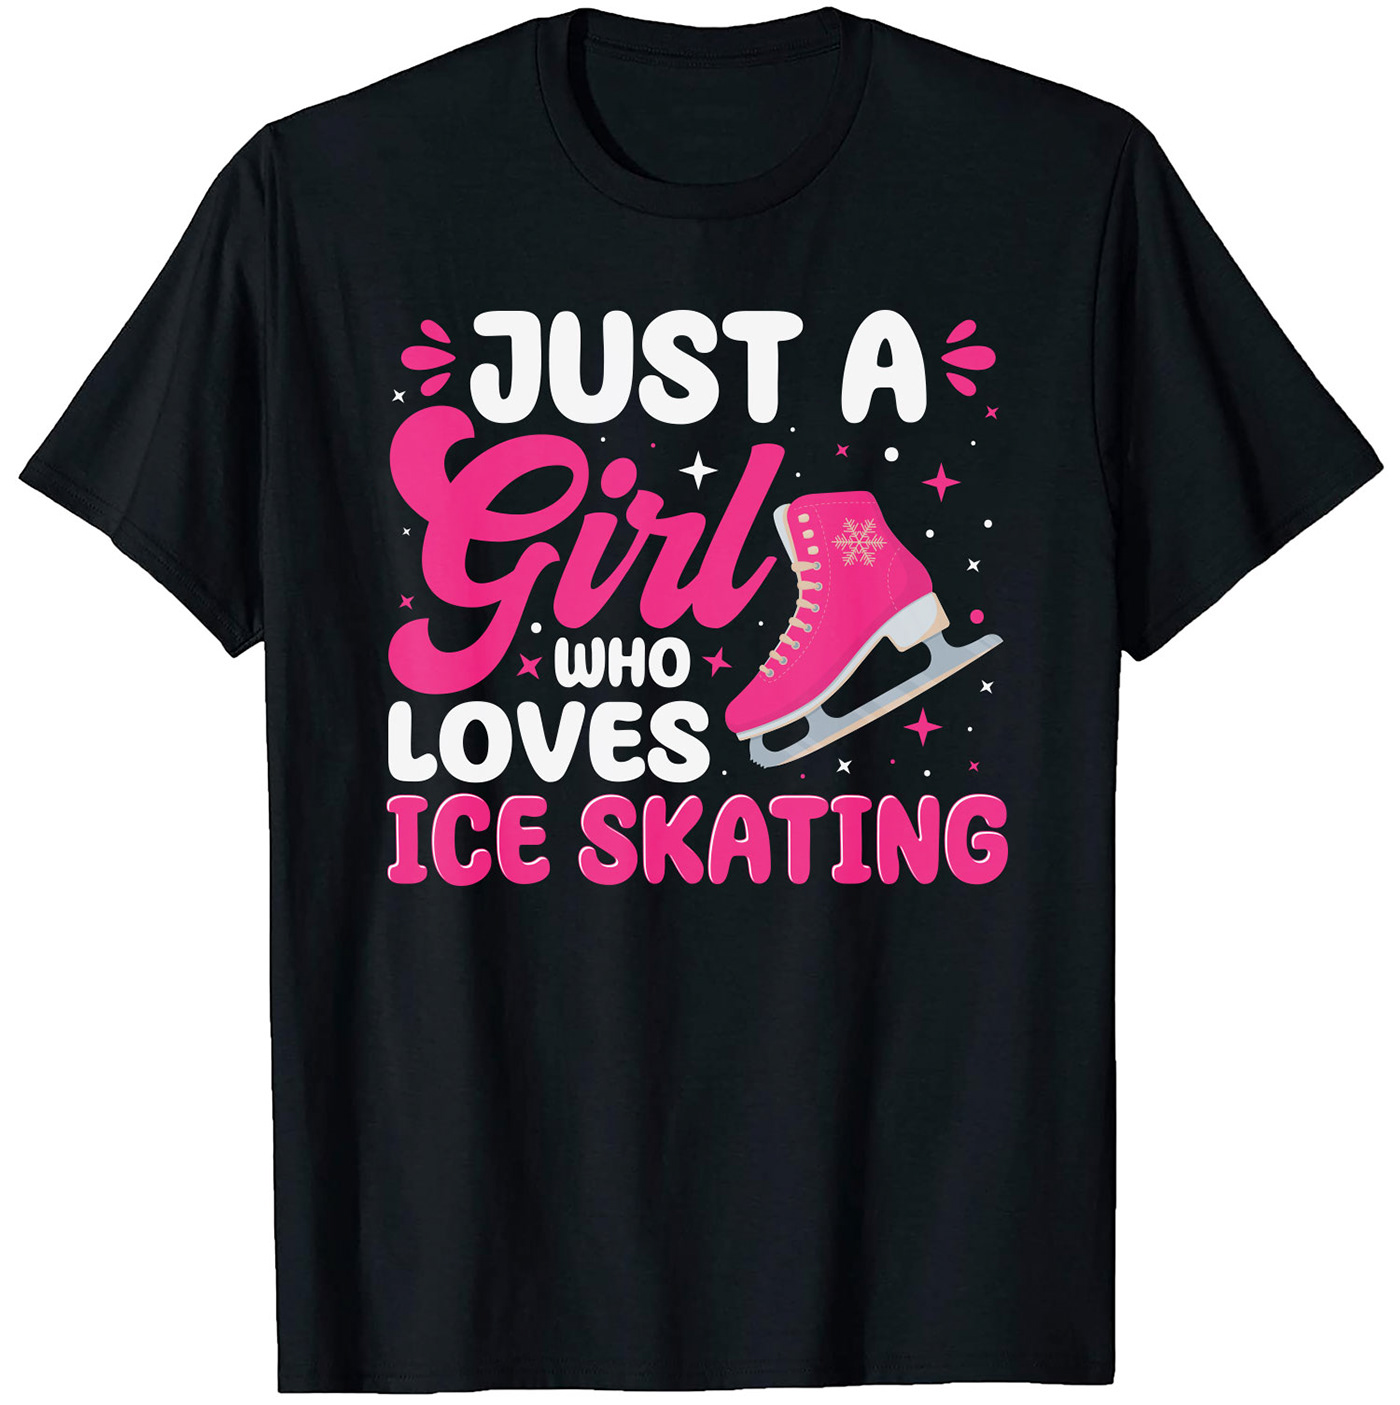 ACTIVE SHIRT Tshirt Design t-shirt apparel tshirt shirt T-Shirt Design iceskating figureskating Roller Derby